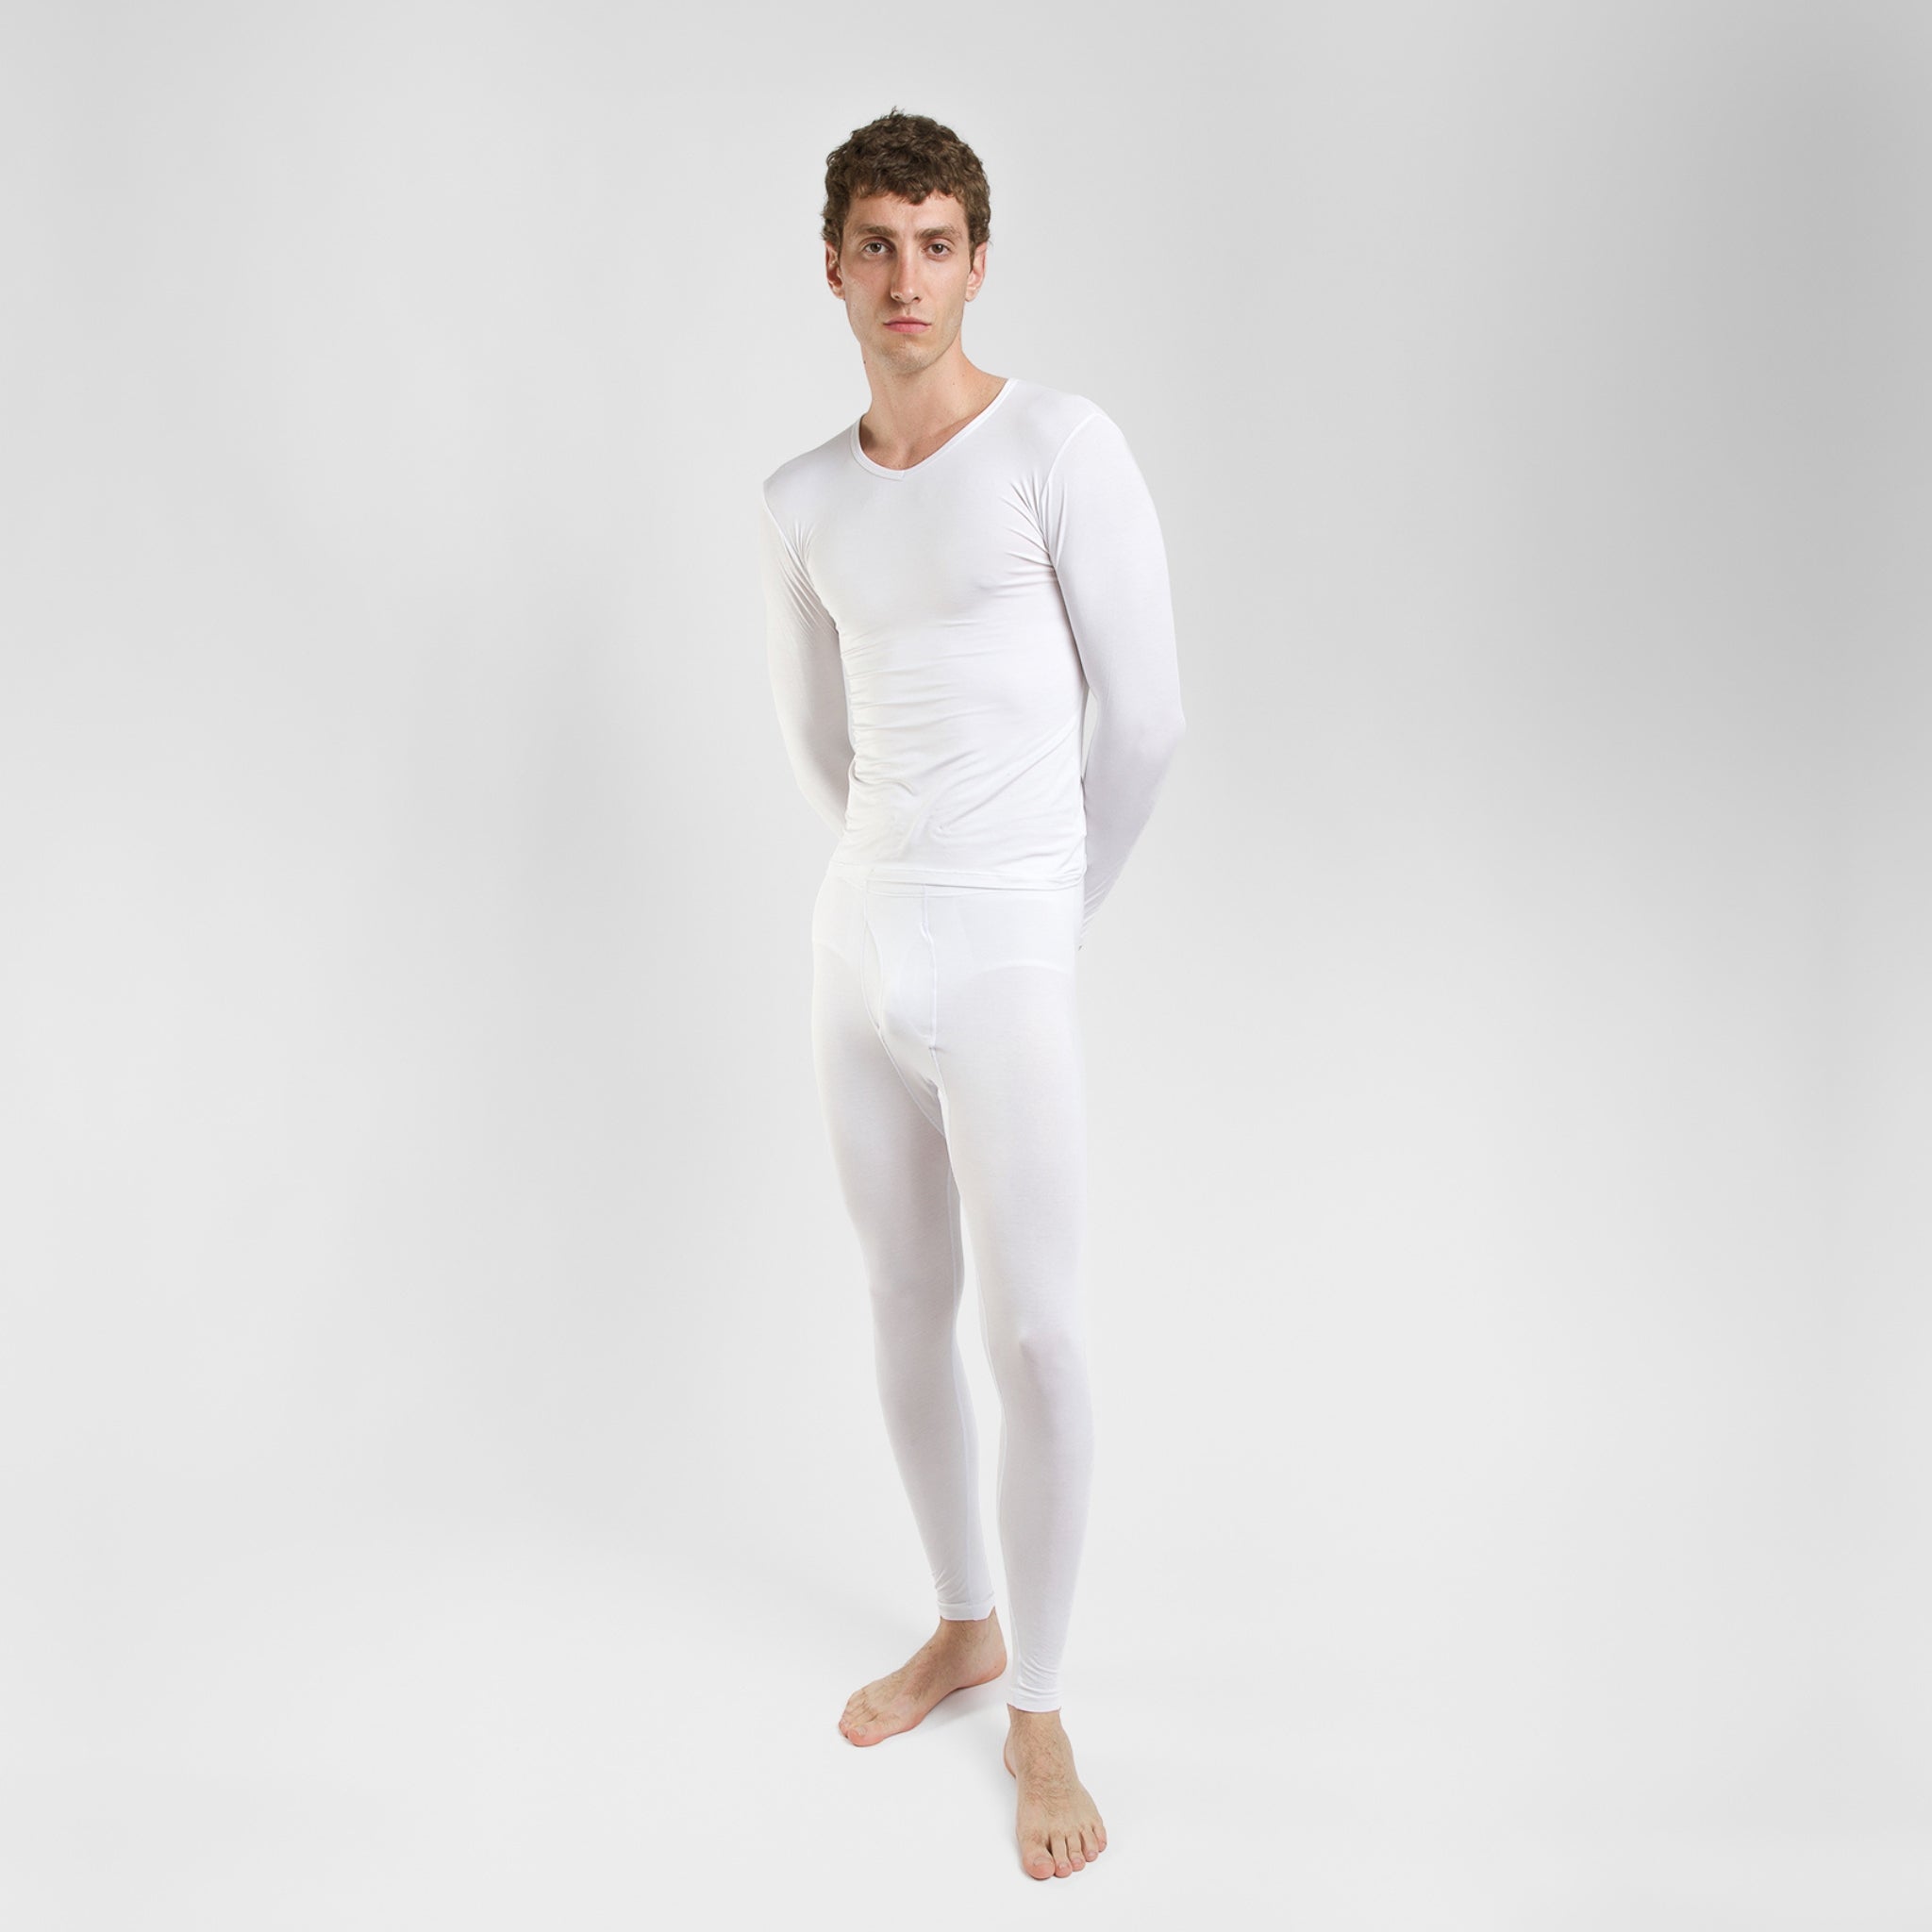 SilkCut-Mens-Thermal Underwear Set